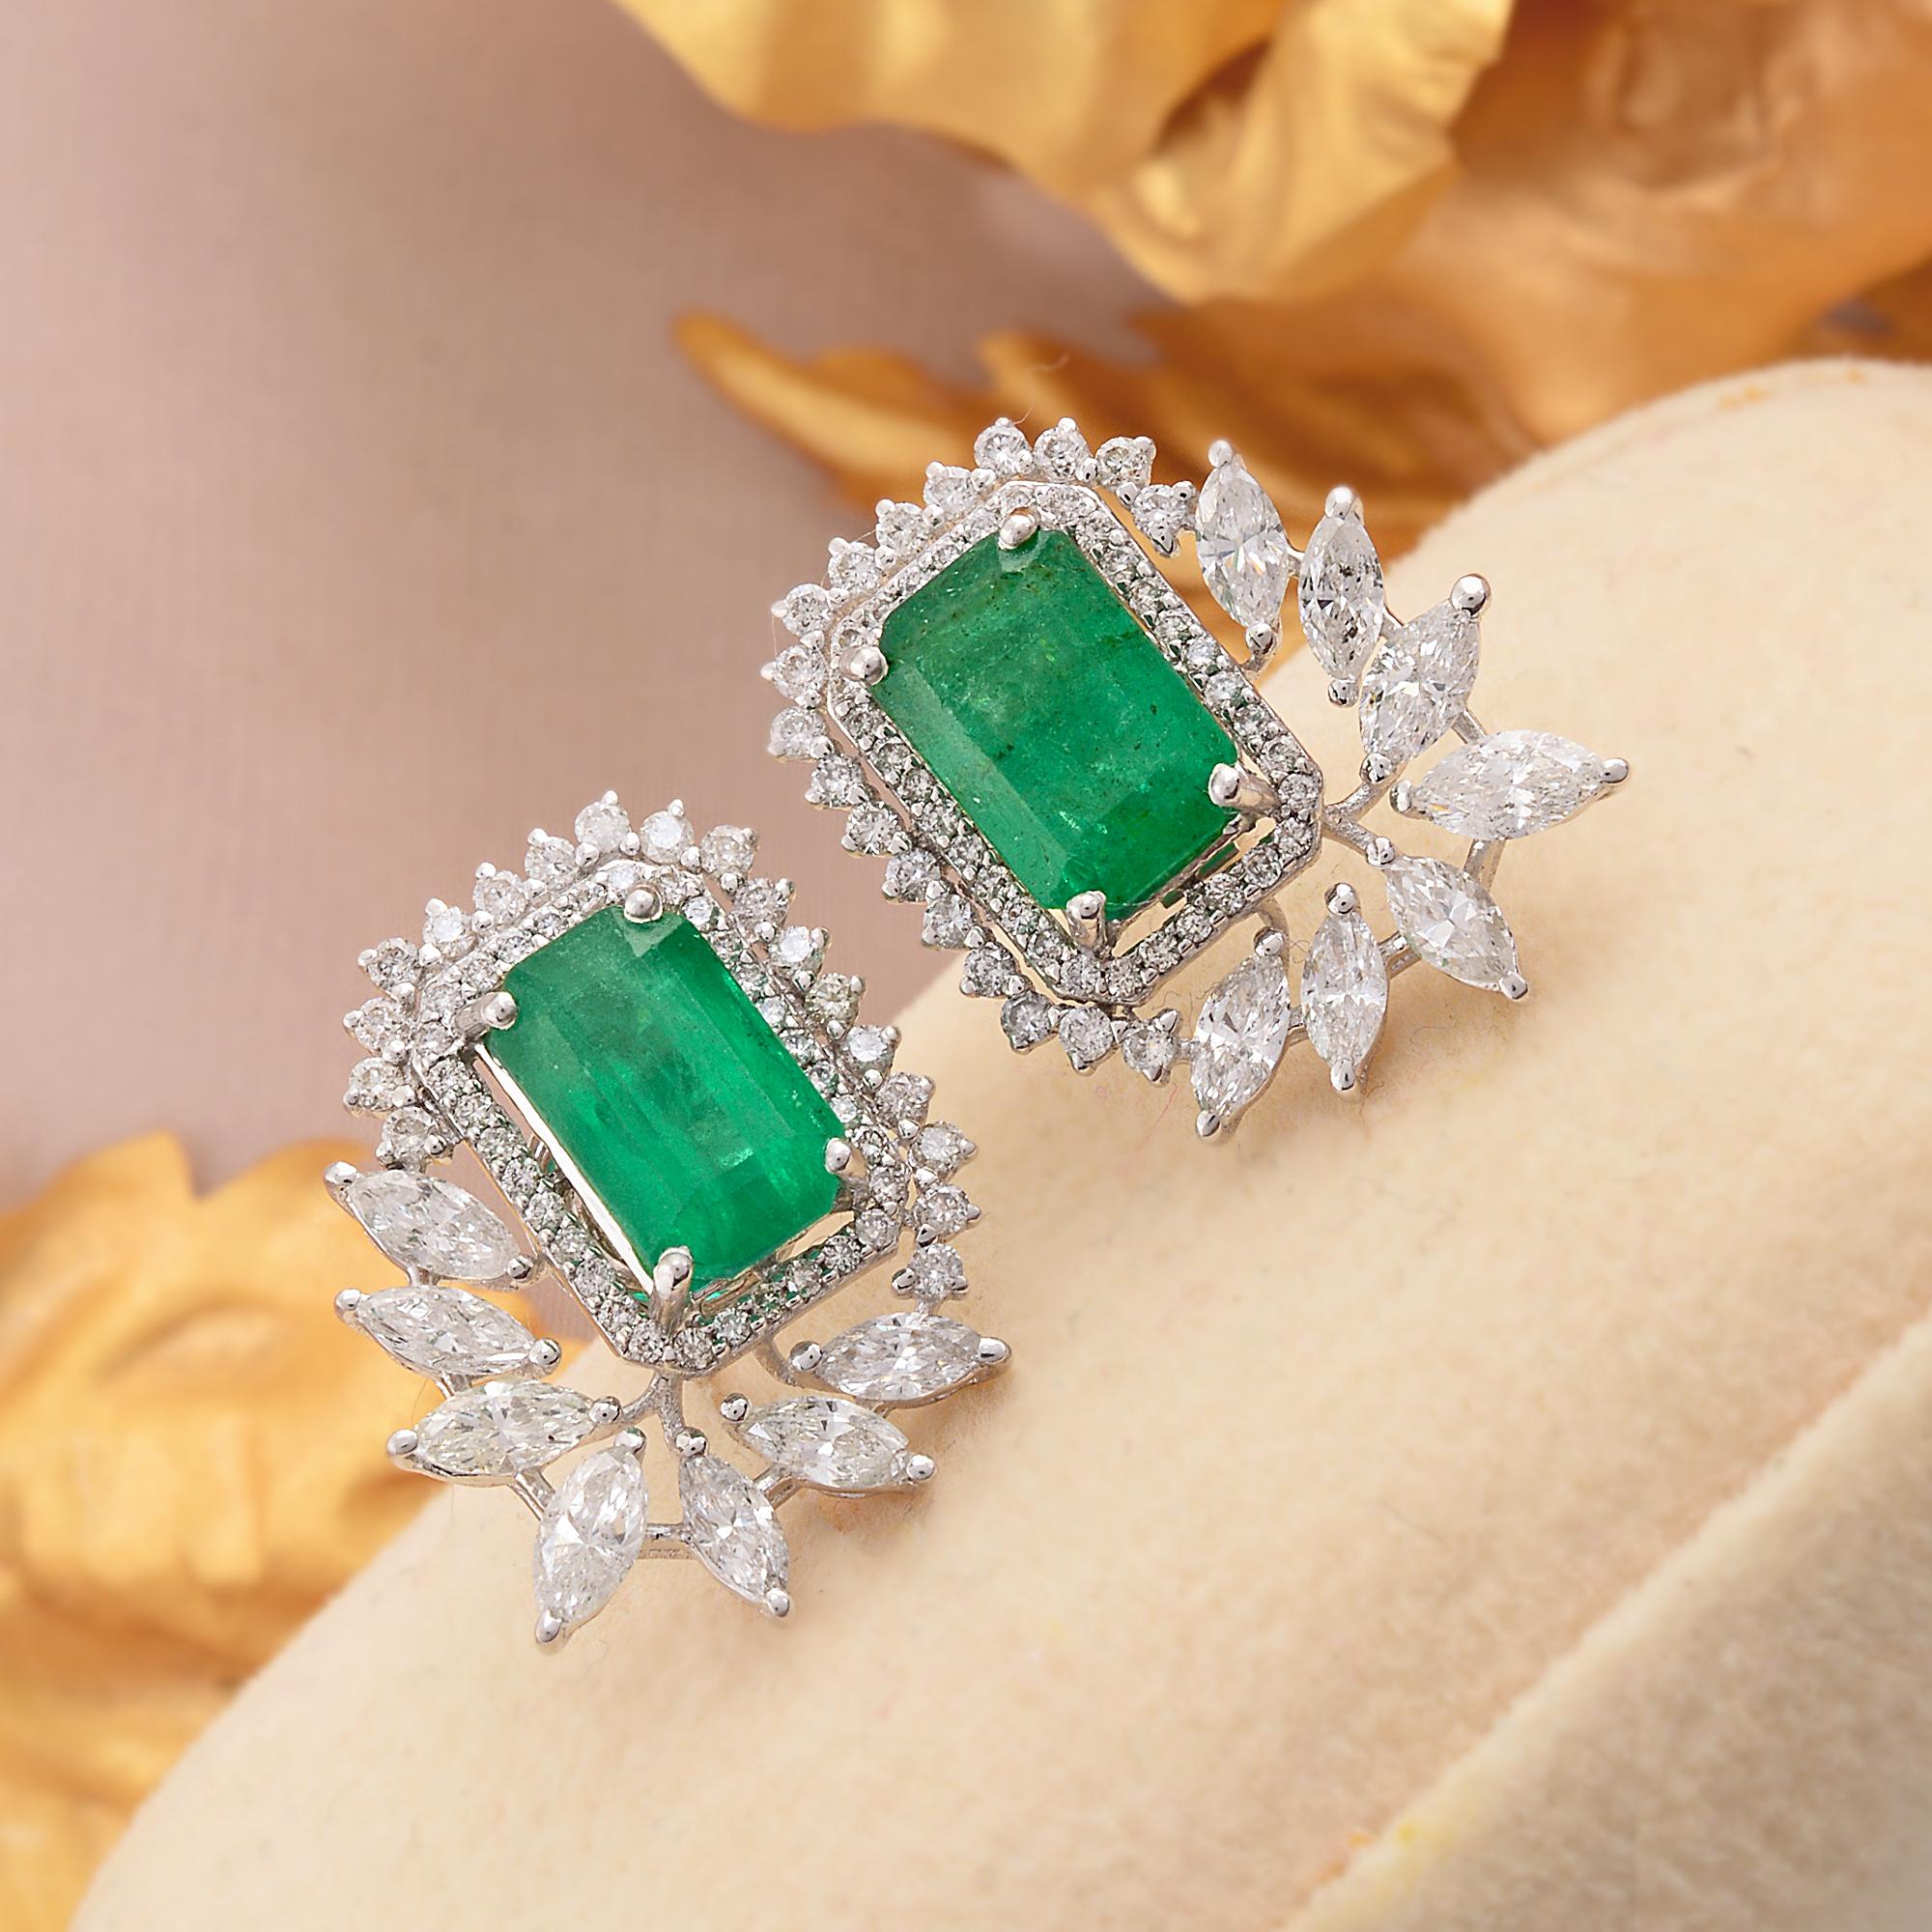 Emerald Cut Zambian Emerald Gemstone Earrings Diamond 18 Karat White Gold Handmade Jewelry For Sale